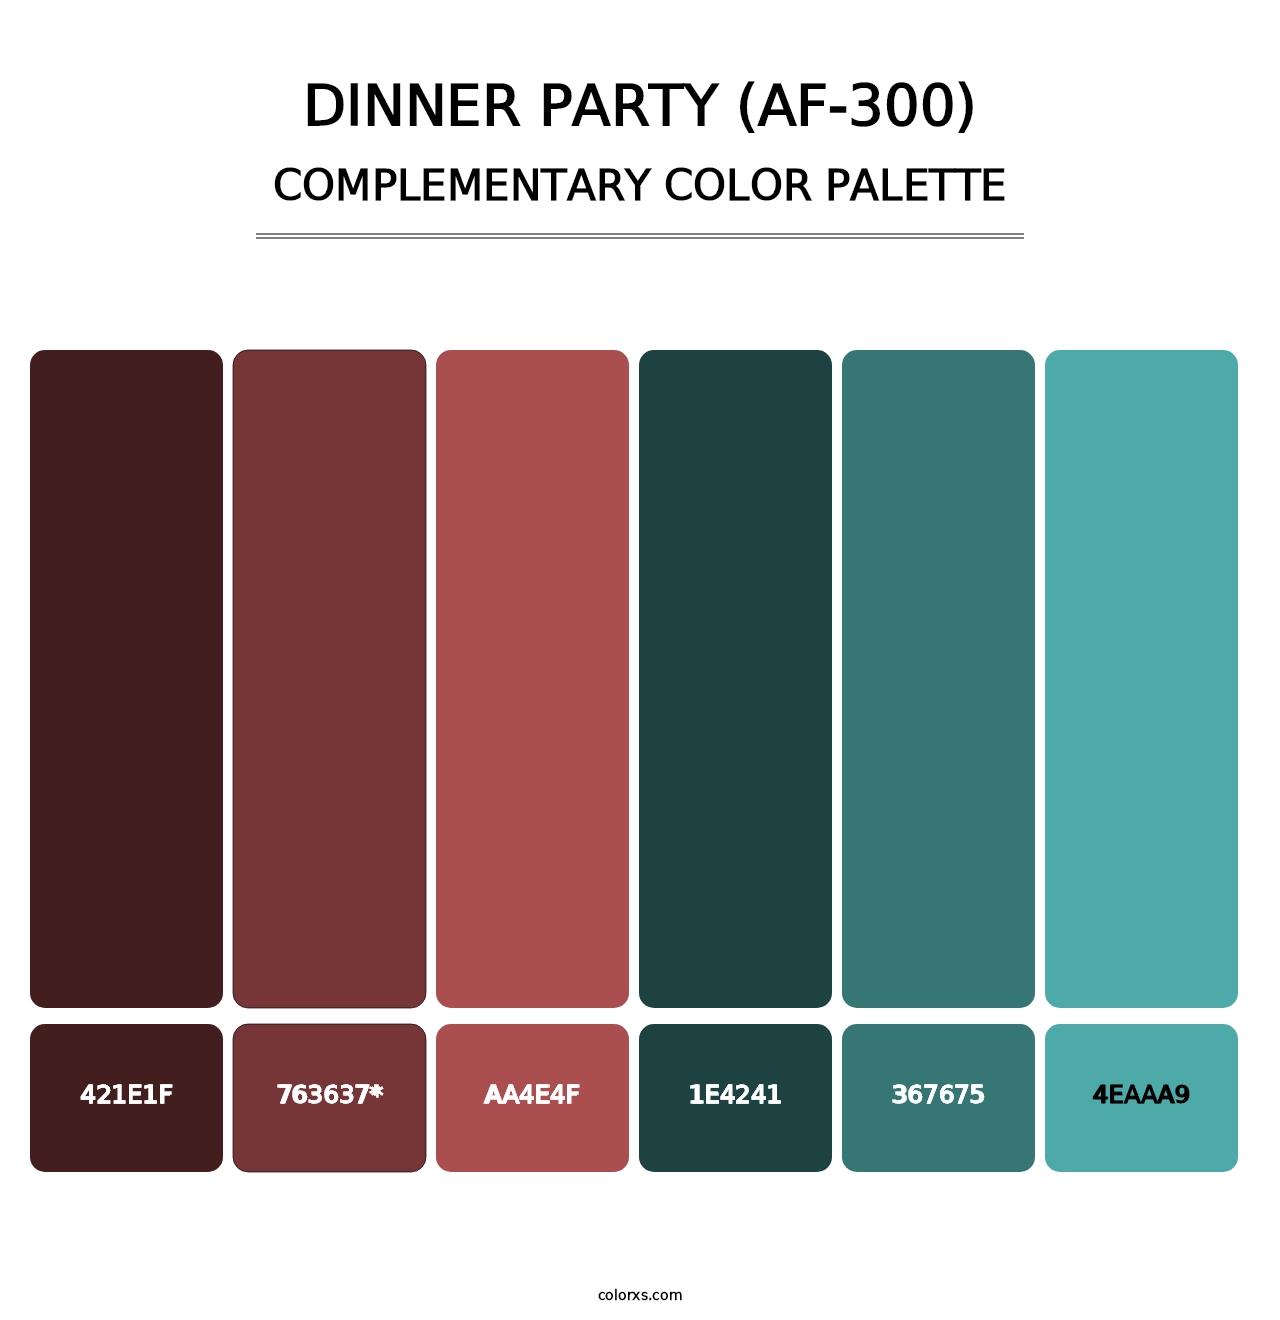 Dinner Party (AF-300) - Complementary Color Palette